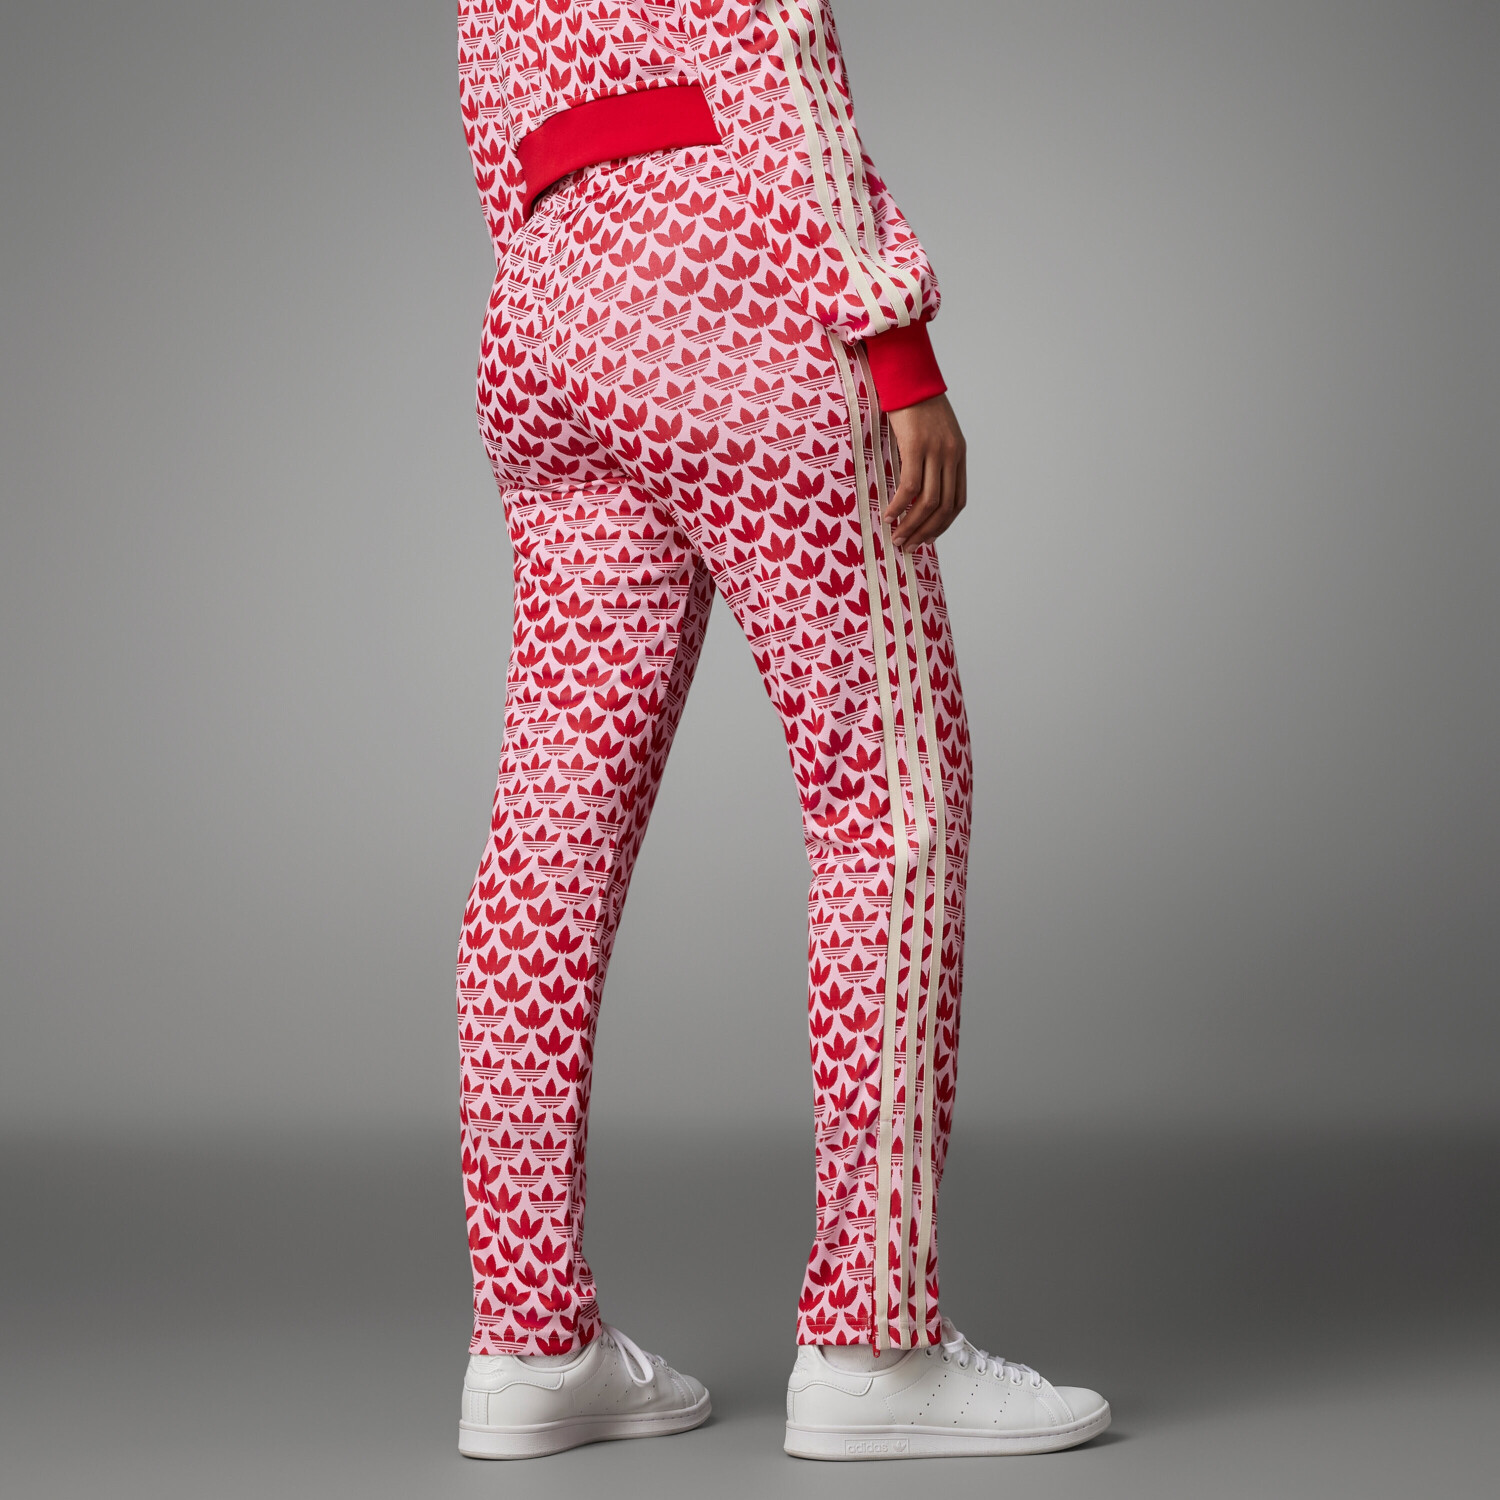 Adidas Woman adicolor 70s SST Training Pants true pink (IK7874) ab 72,00 €  | Preisvergleich bei